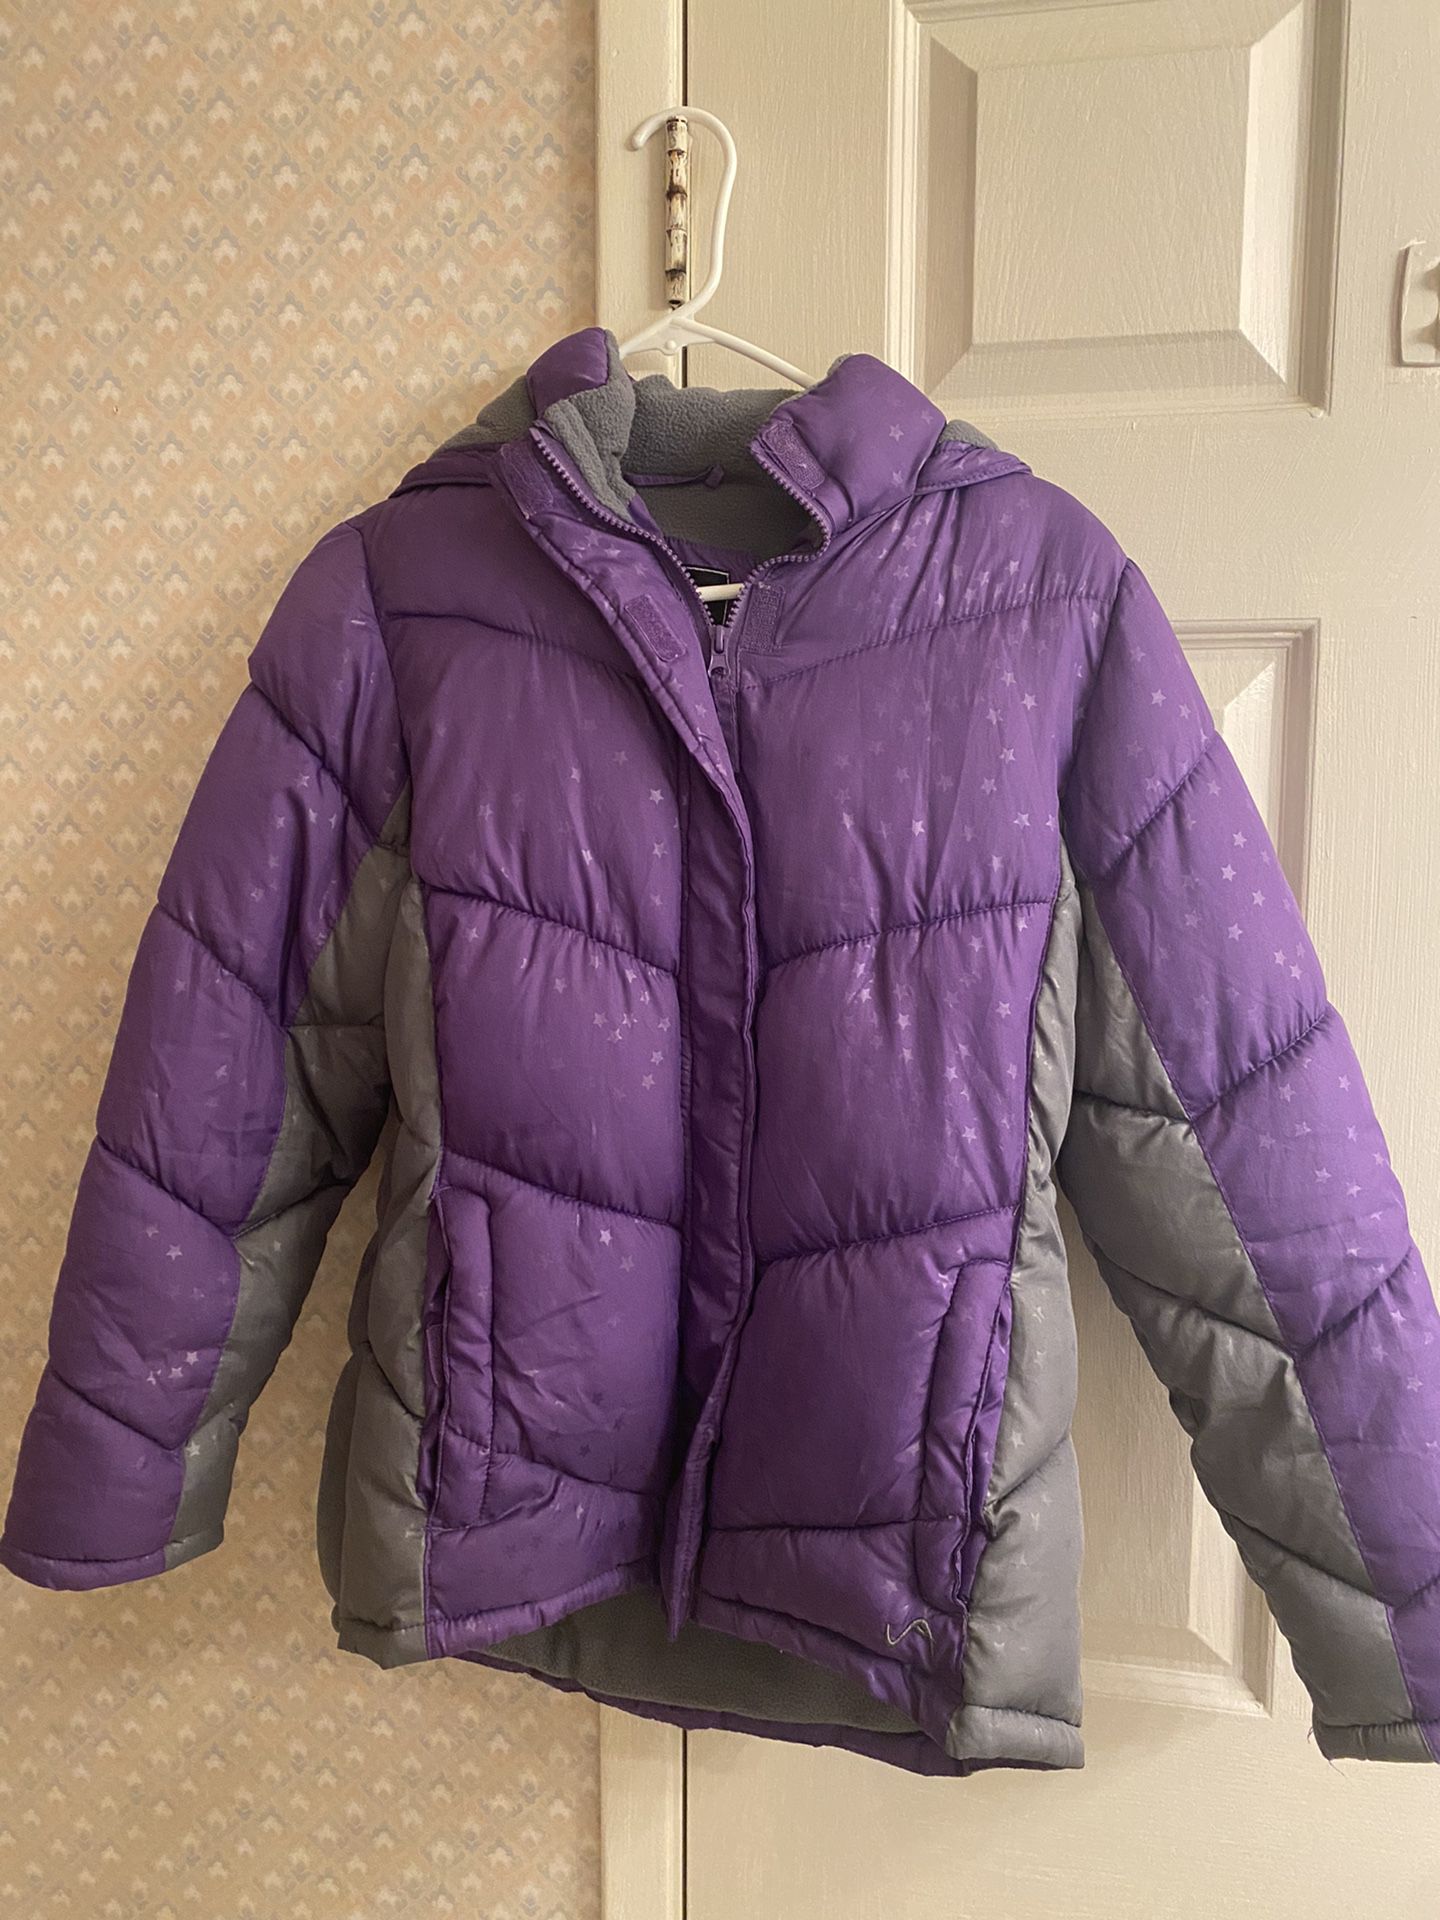 Girls Jackets/Coat Size Xl 14-16